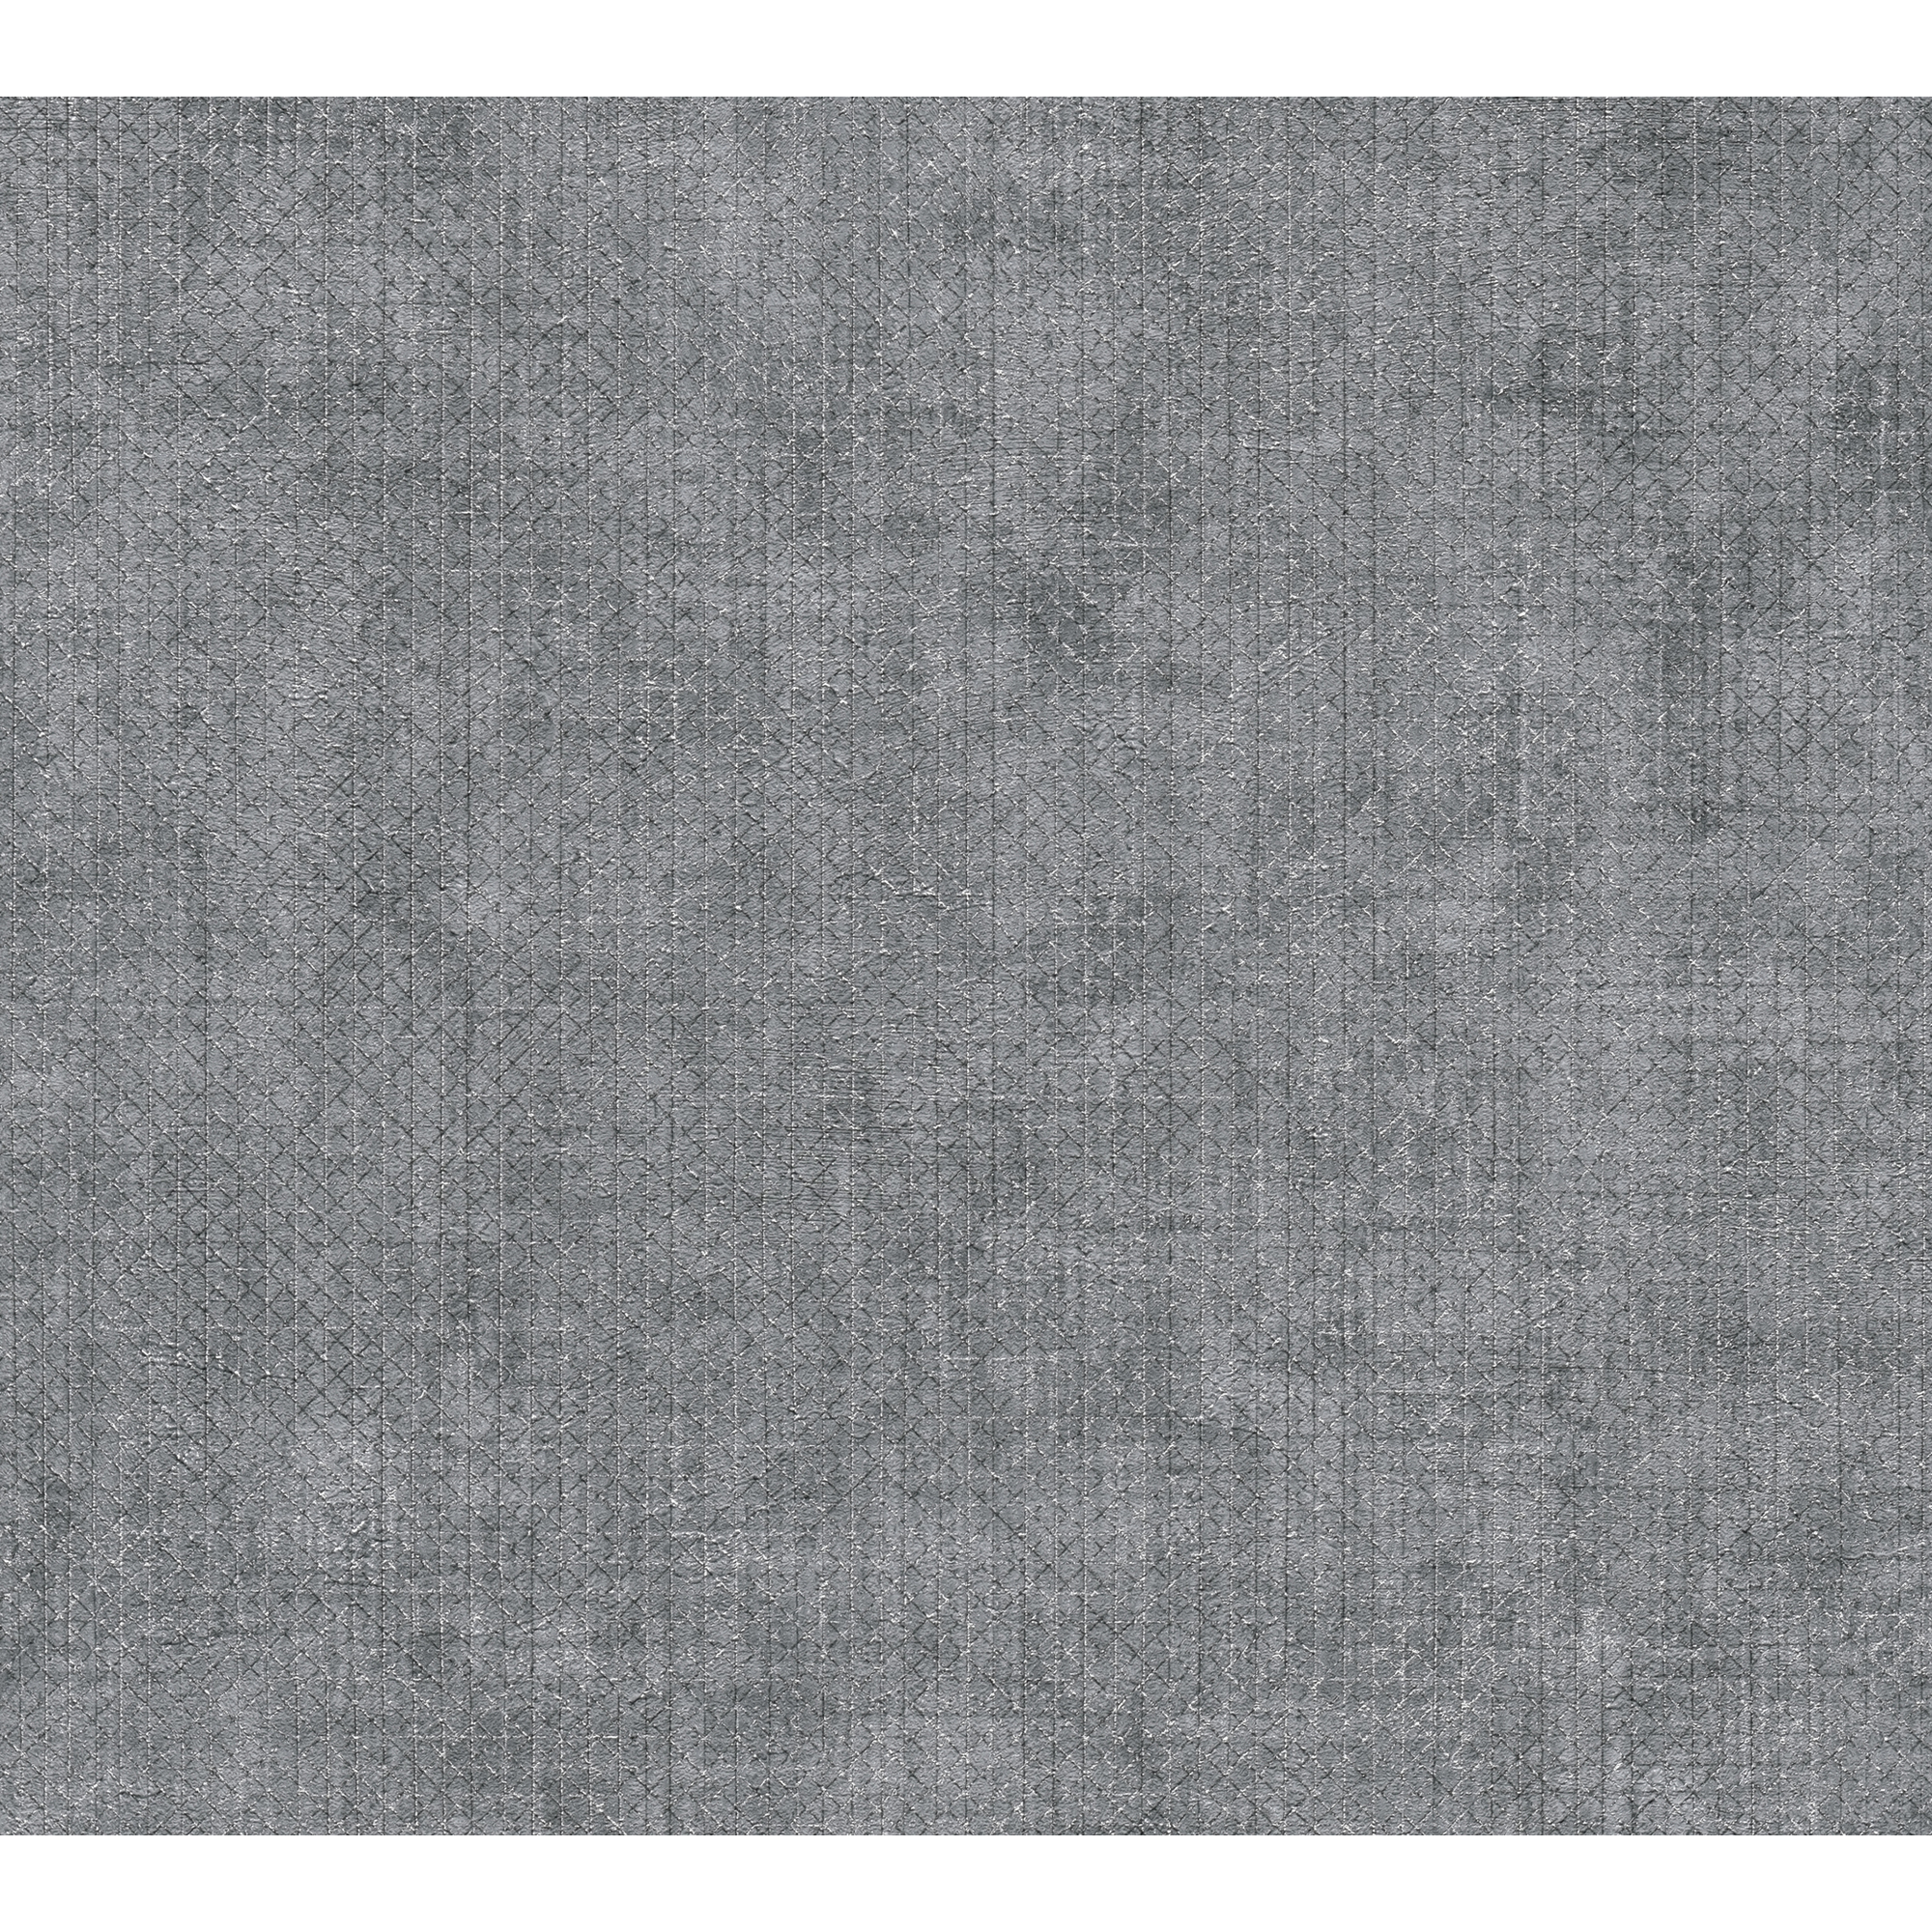 Vliestapete 'The BoS' Rautenmuster Grafik anthrazit 10,05 x 0,53 m + product picture